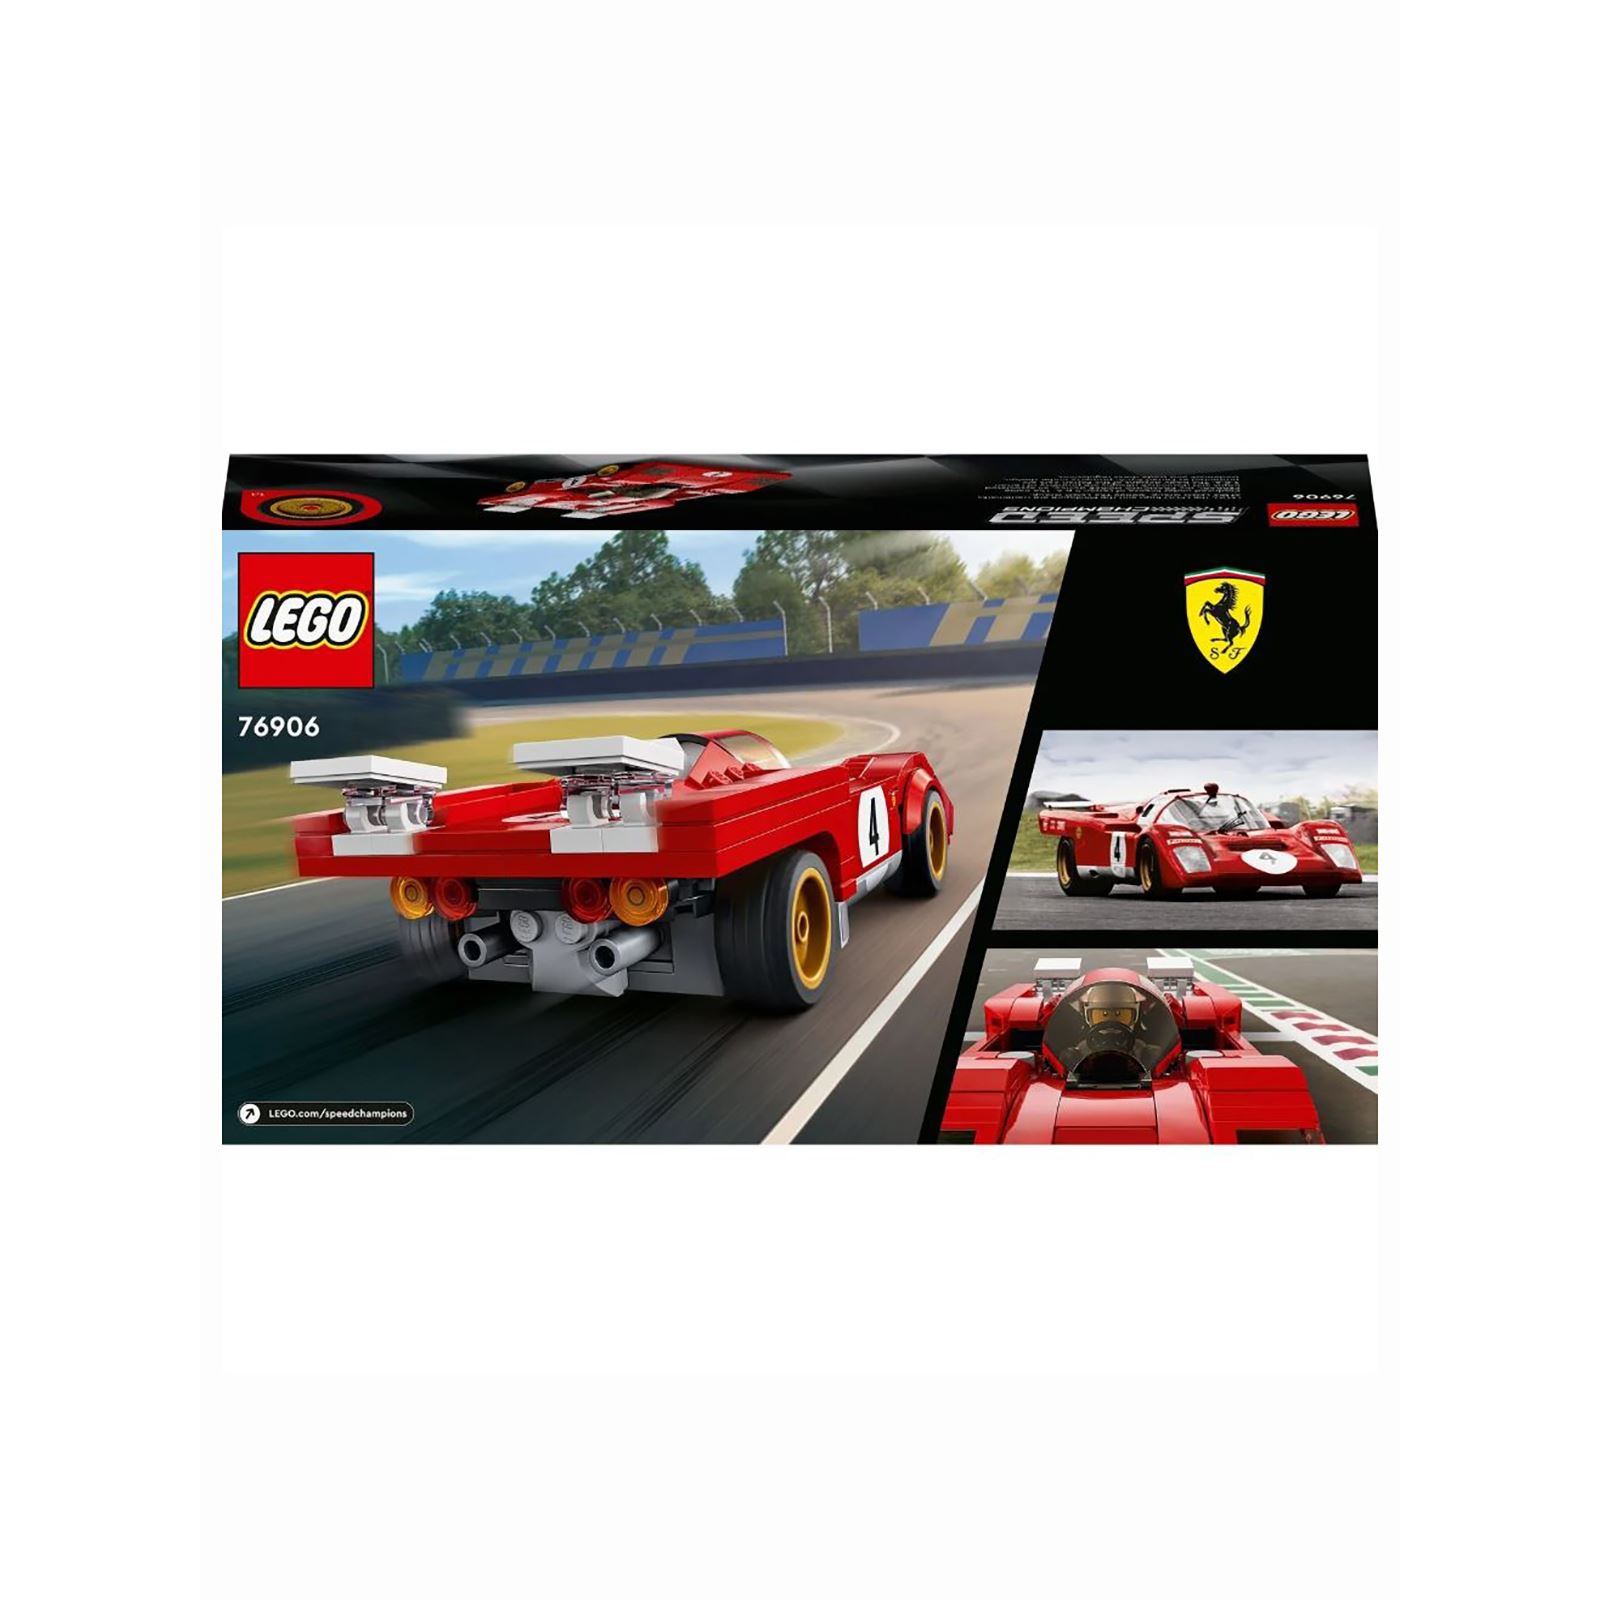 LEGO Speed Champions 1970 Ferrari Kırmızı